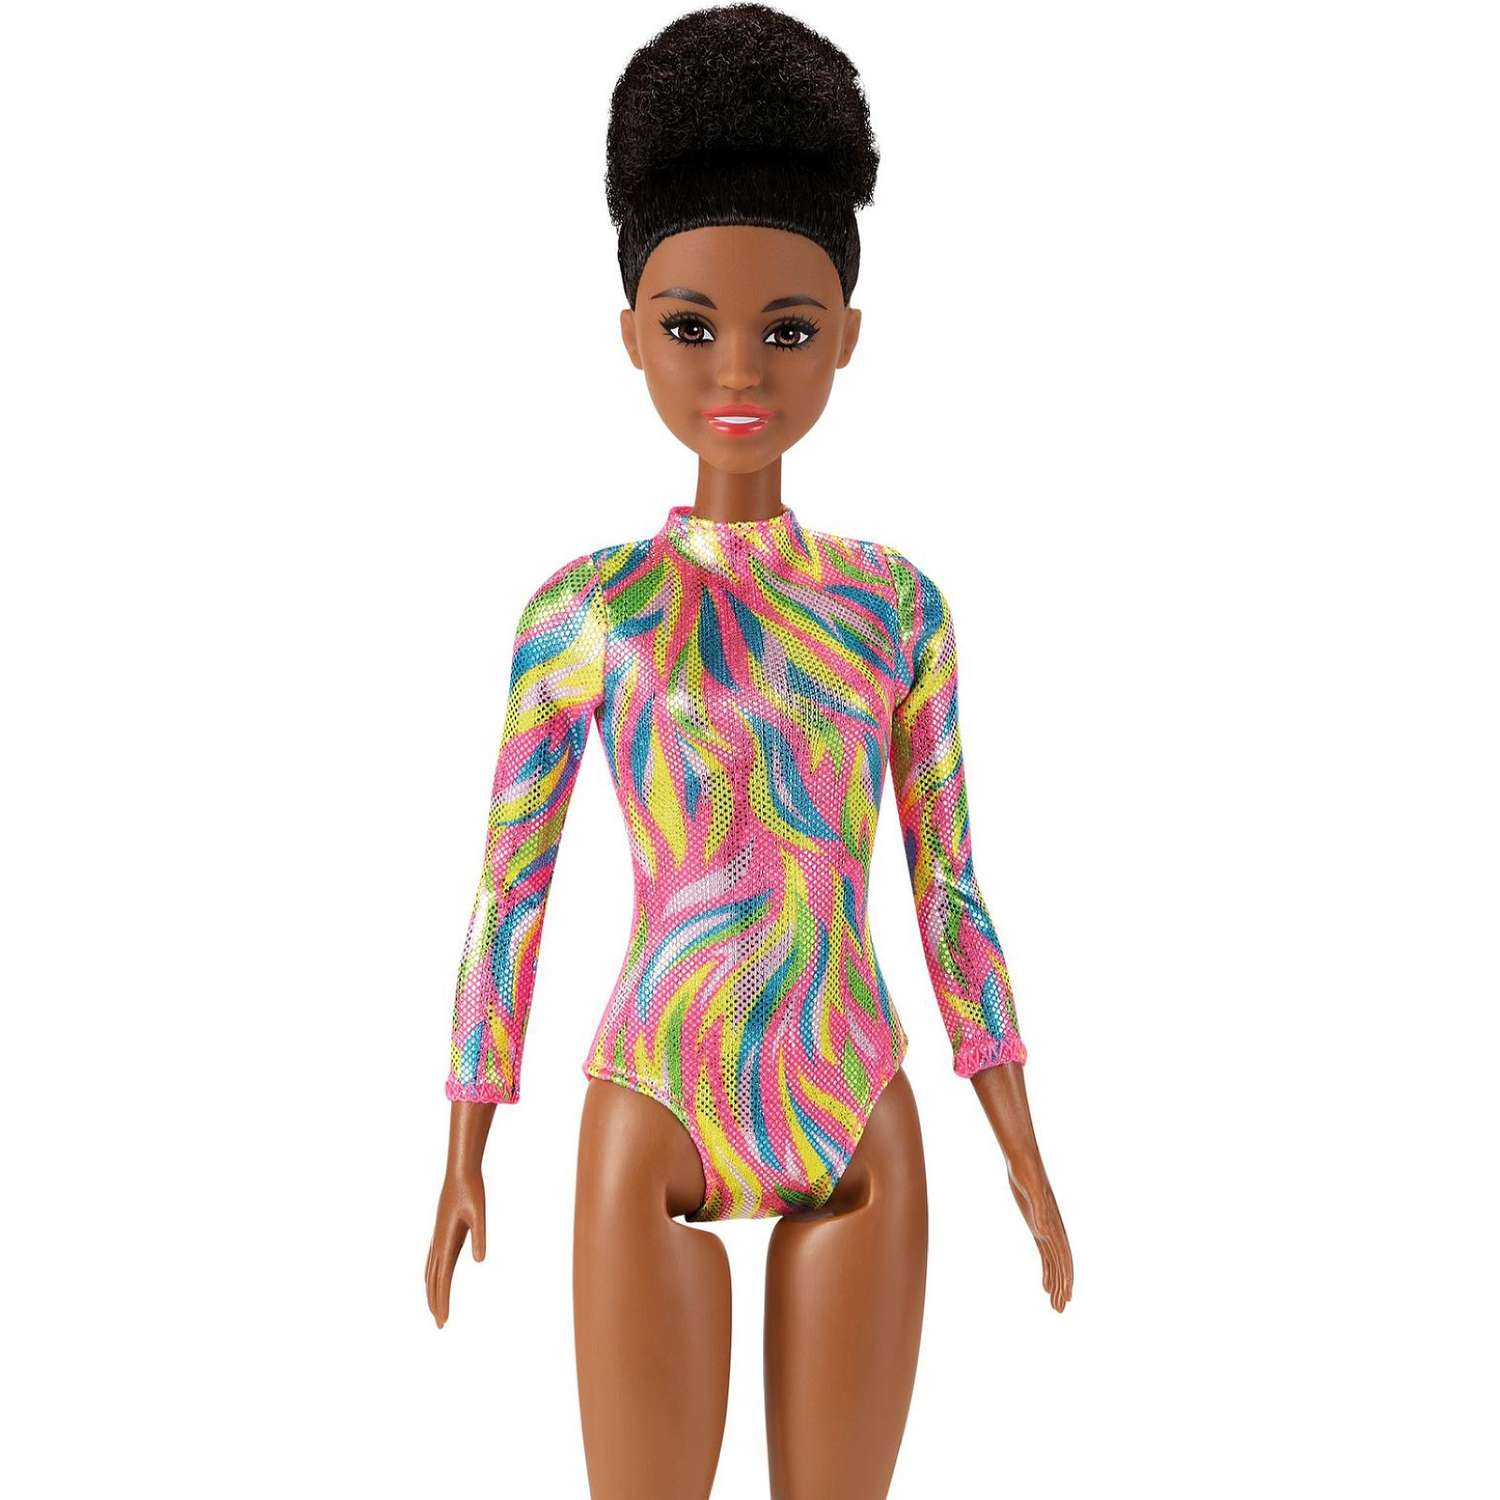 Кукла Barbie Кем быть? GTW37 DVF50 - фото 7